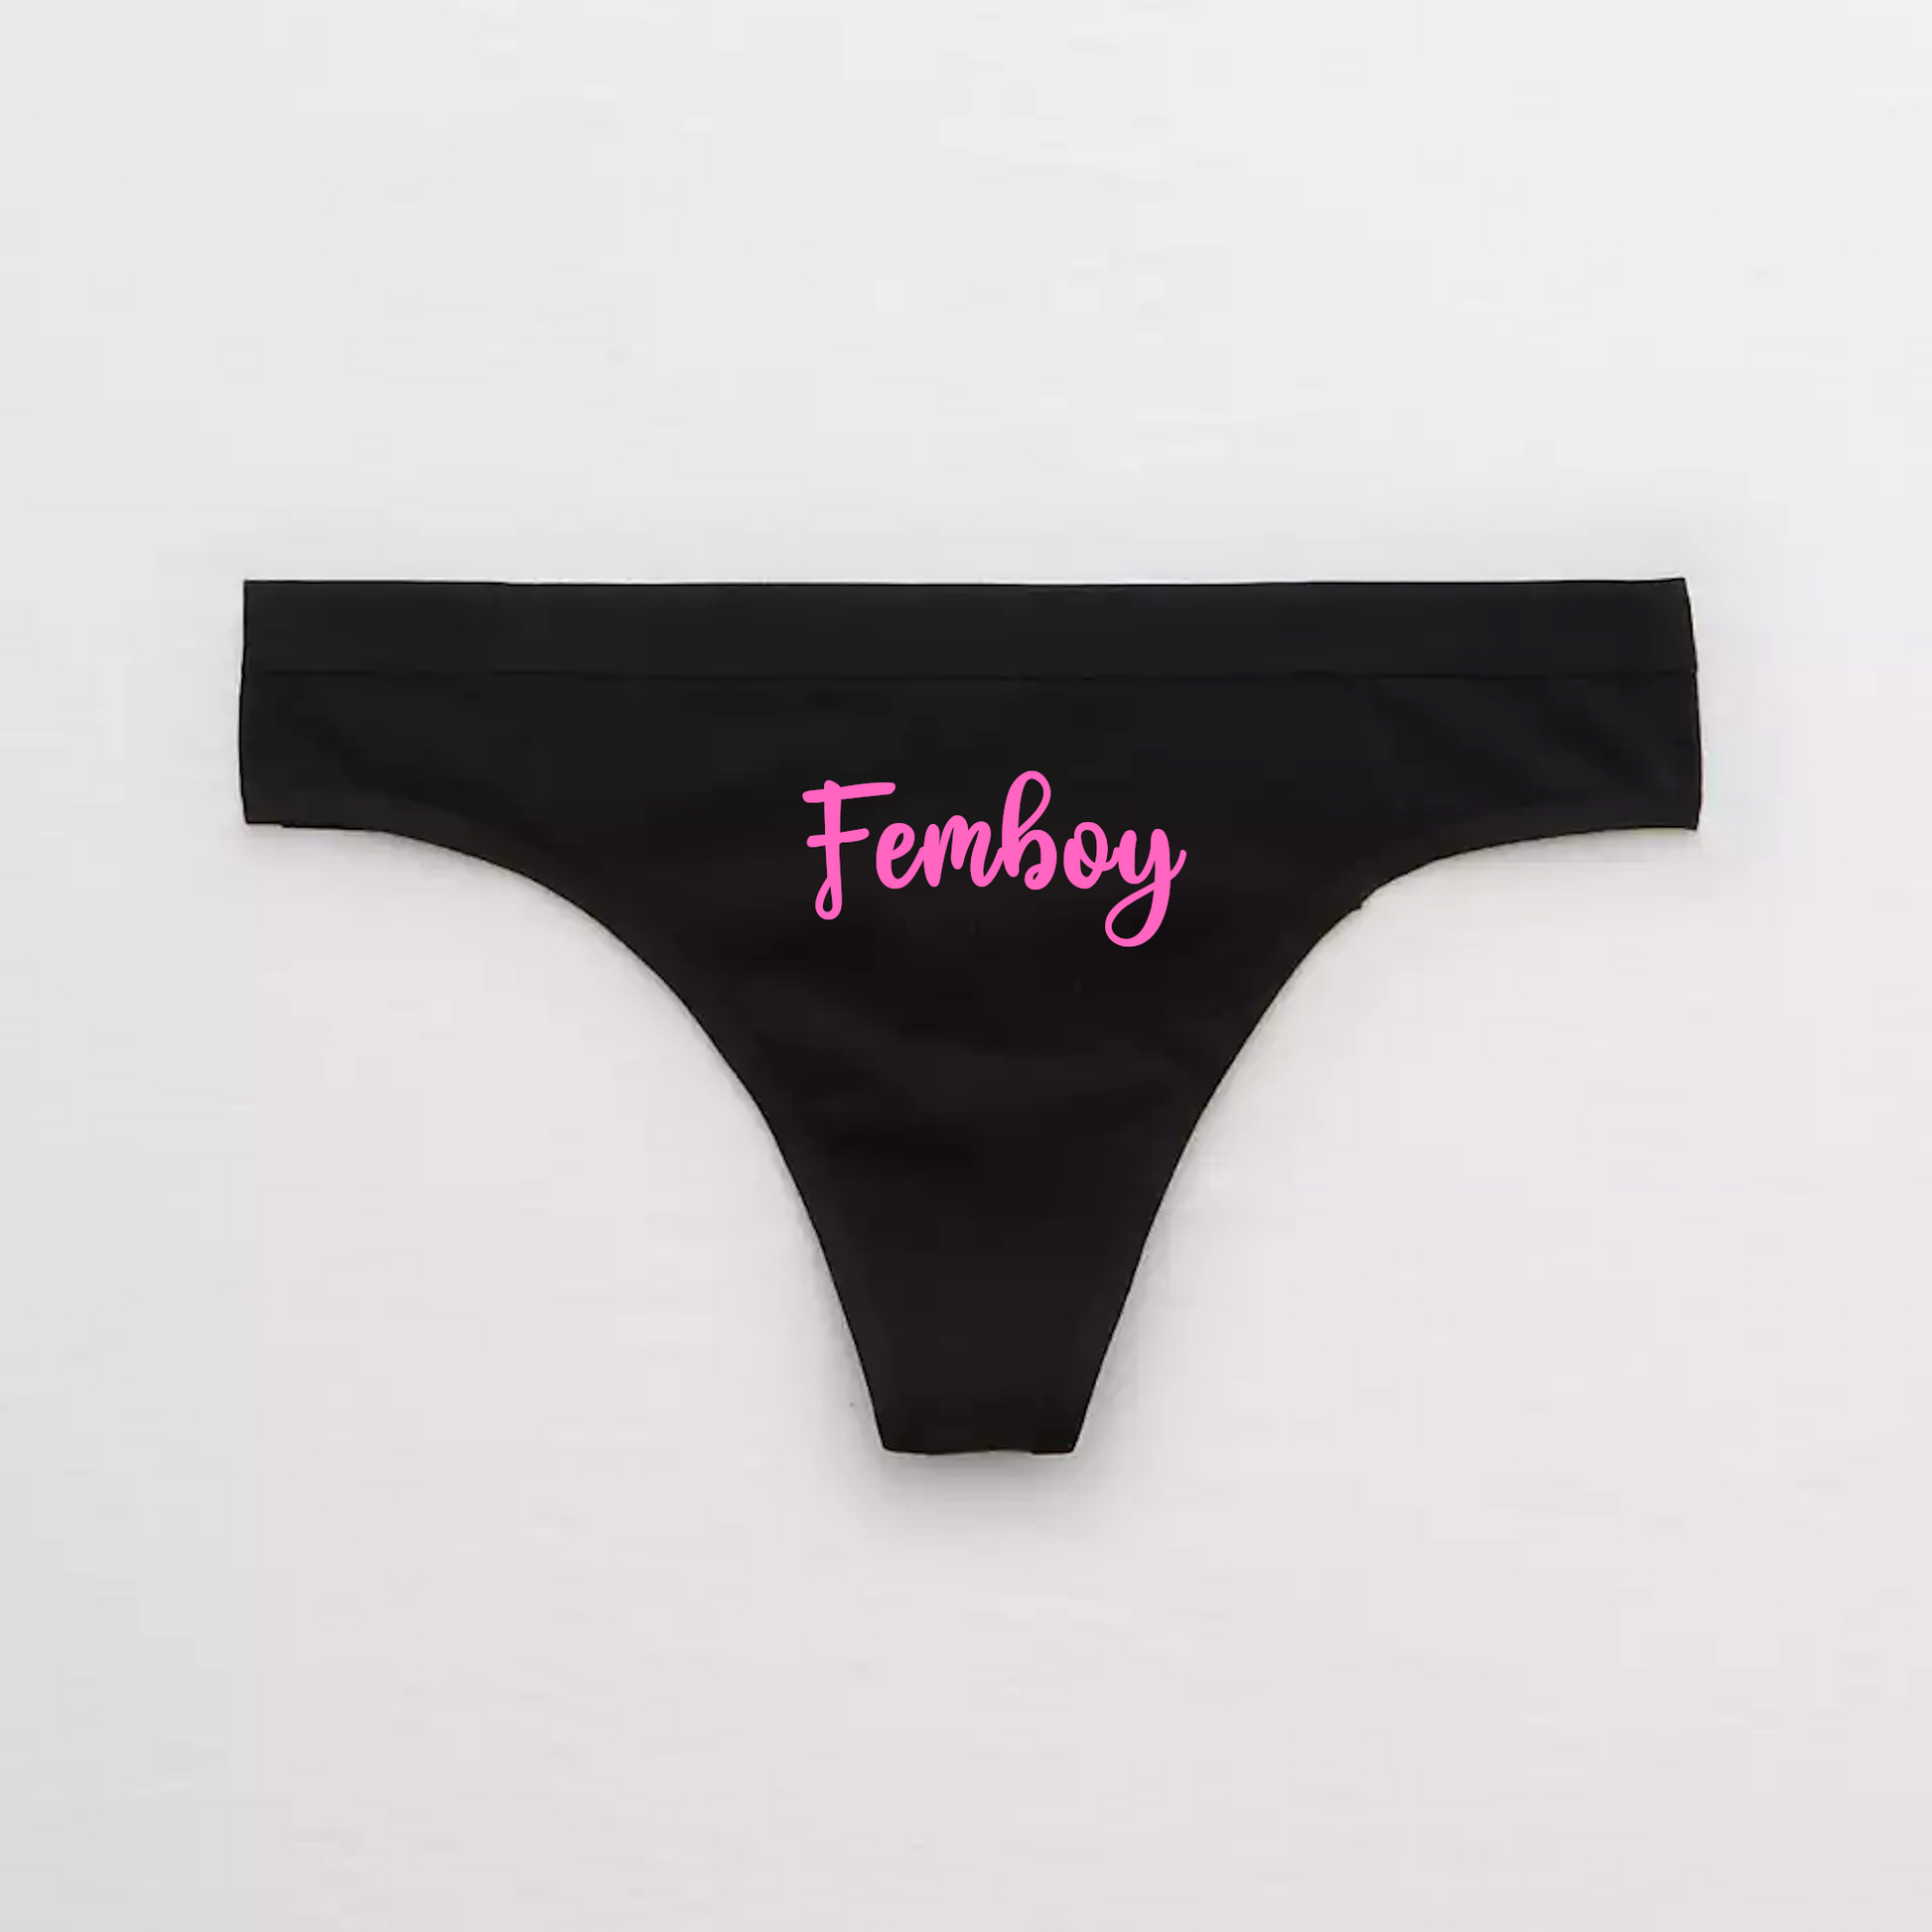 It ain't Gonna Lick Itself Thongs - Naughty Underwear DDLG Kinky